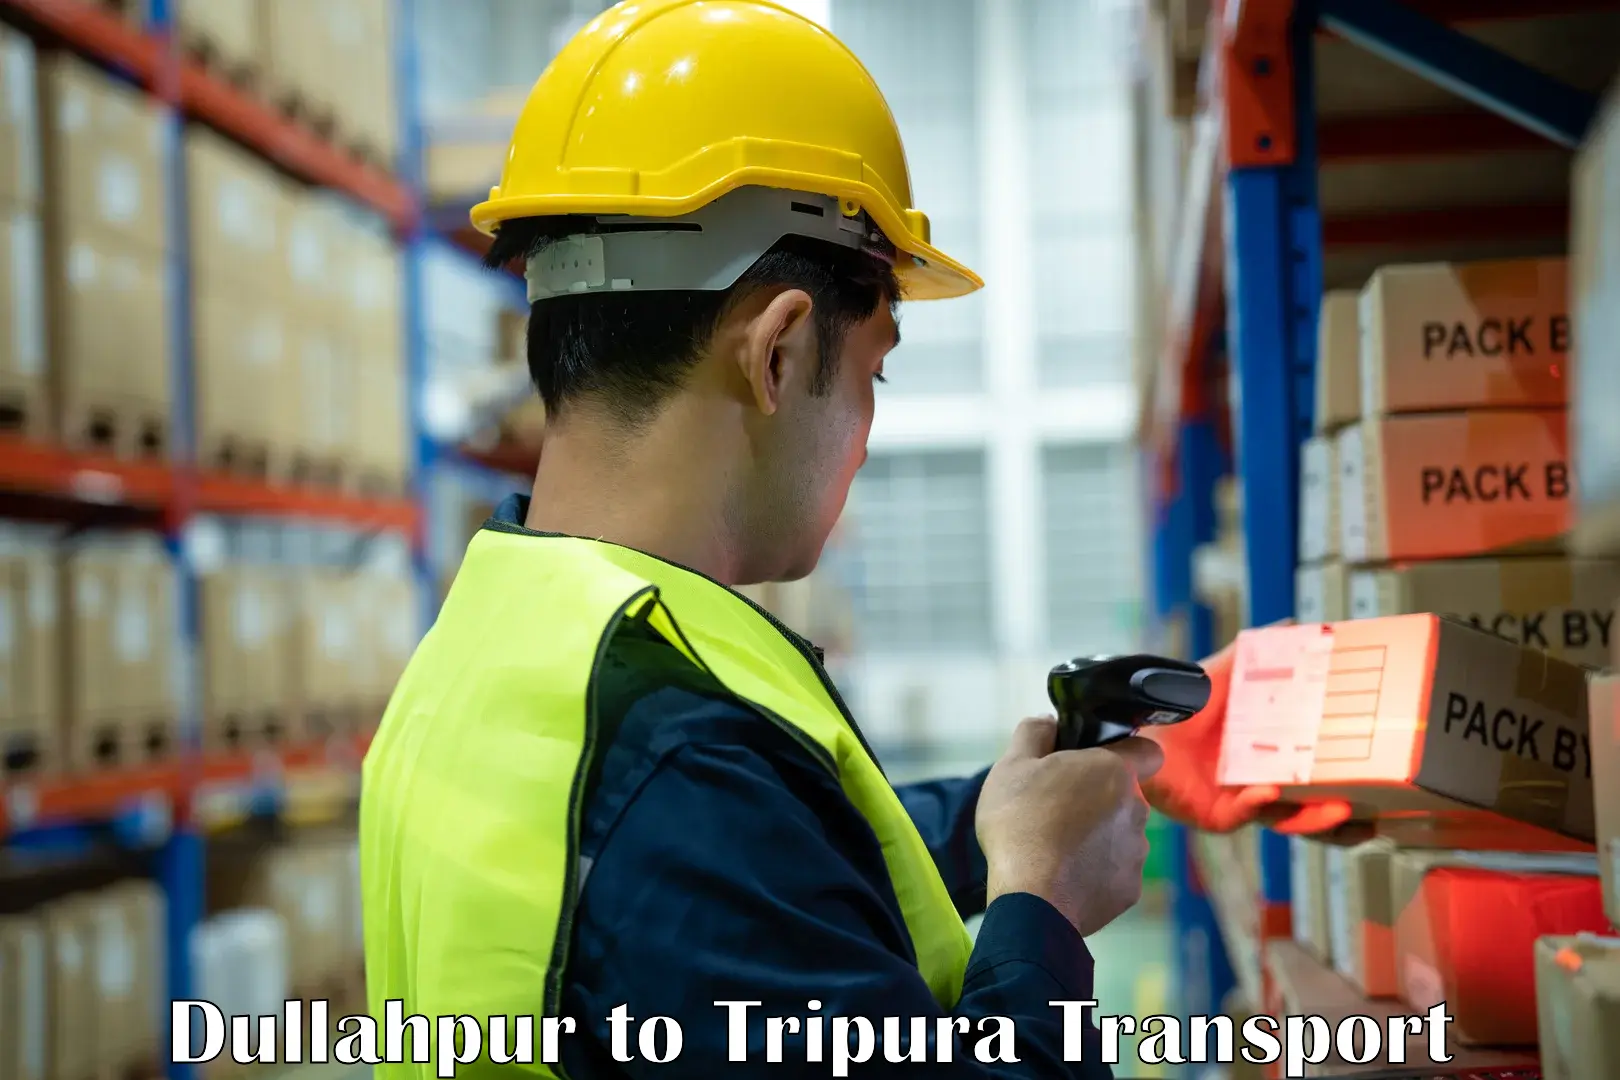 Sending bike to another city Dullahpur to Tripura